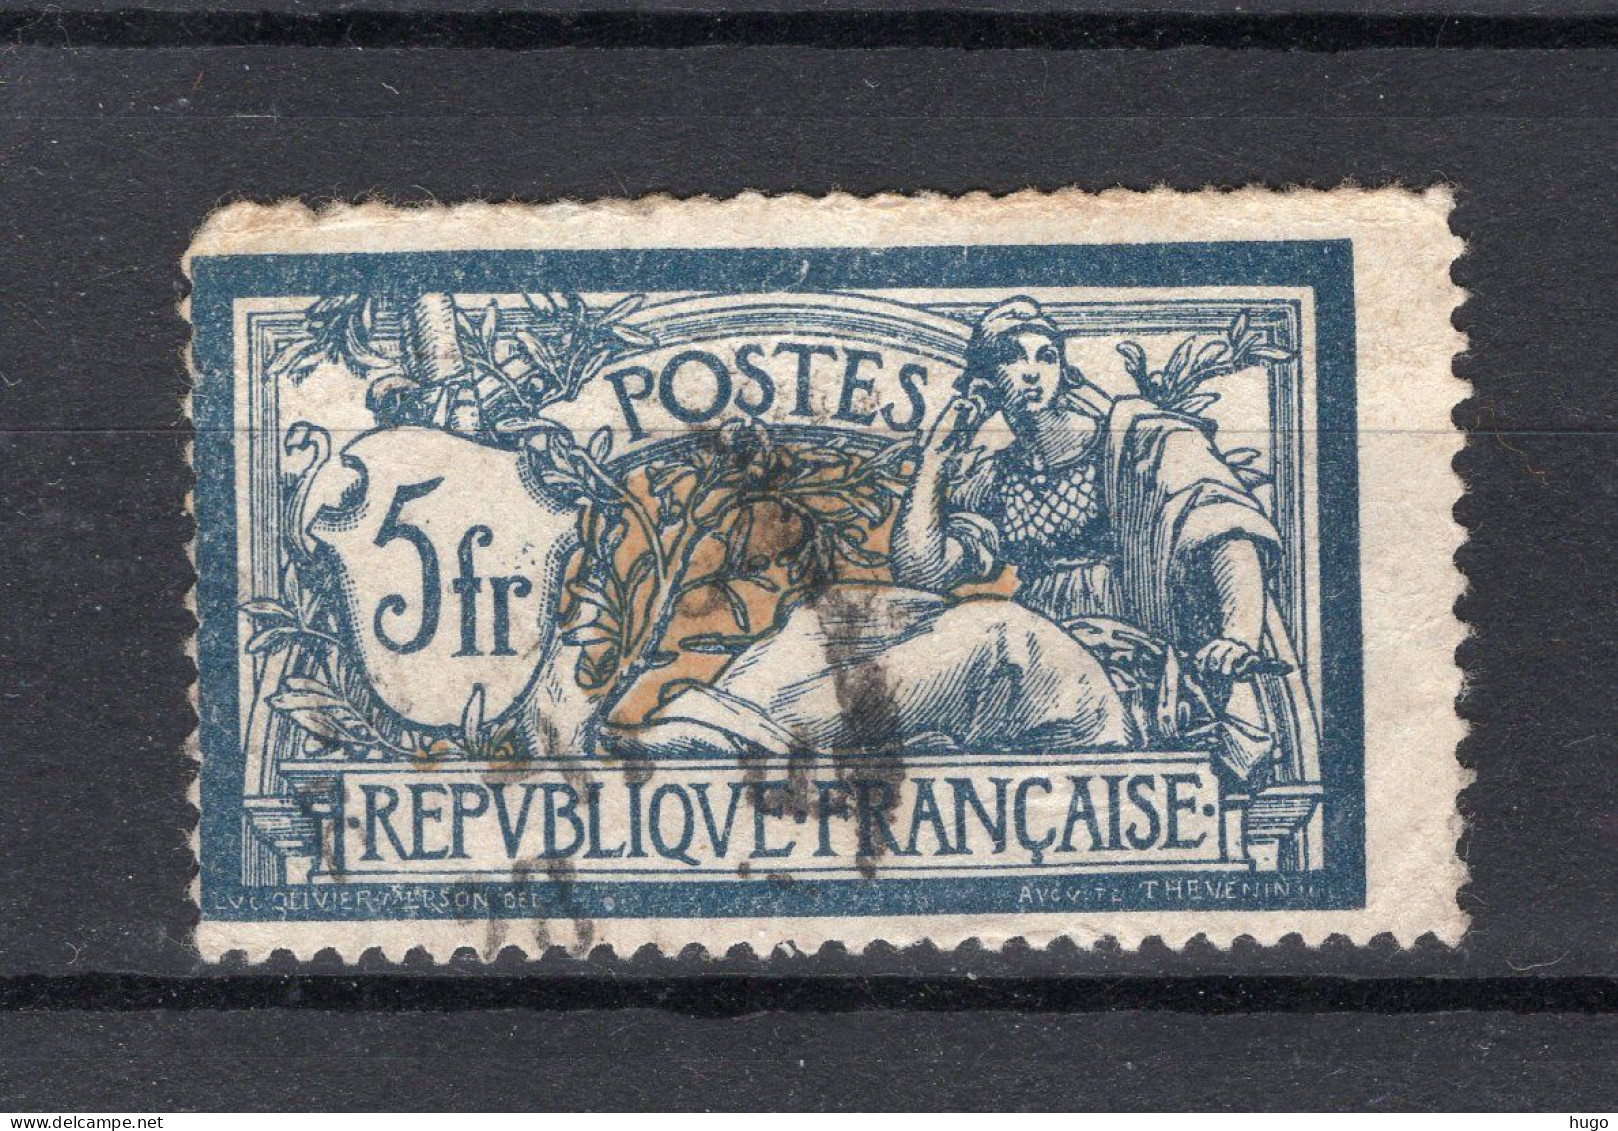 FRANKRIJK Yt. 123° Gestempeld 1900 - Used Stamps